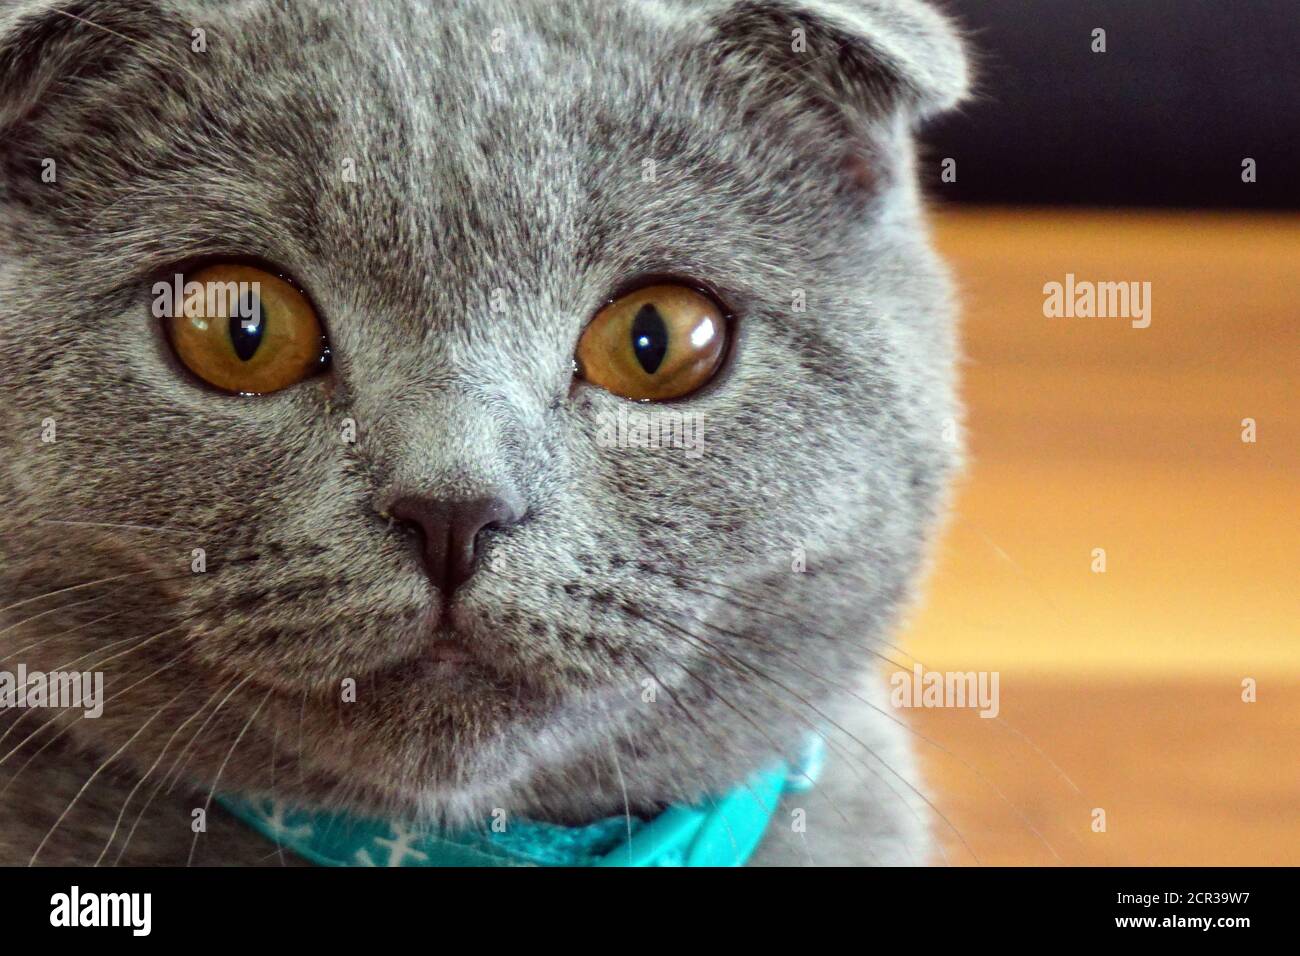 Cute scottish fold cat looking at camera close up view Stock Photo